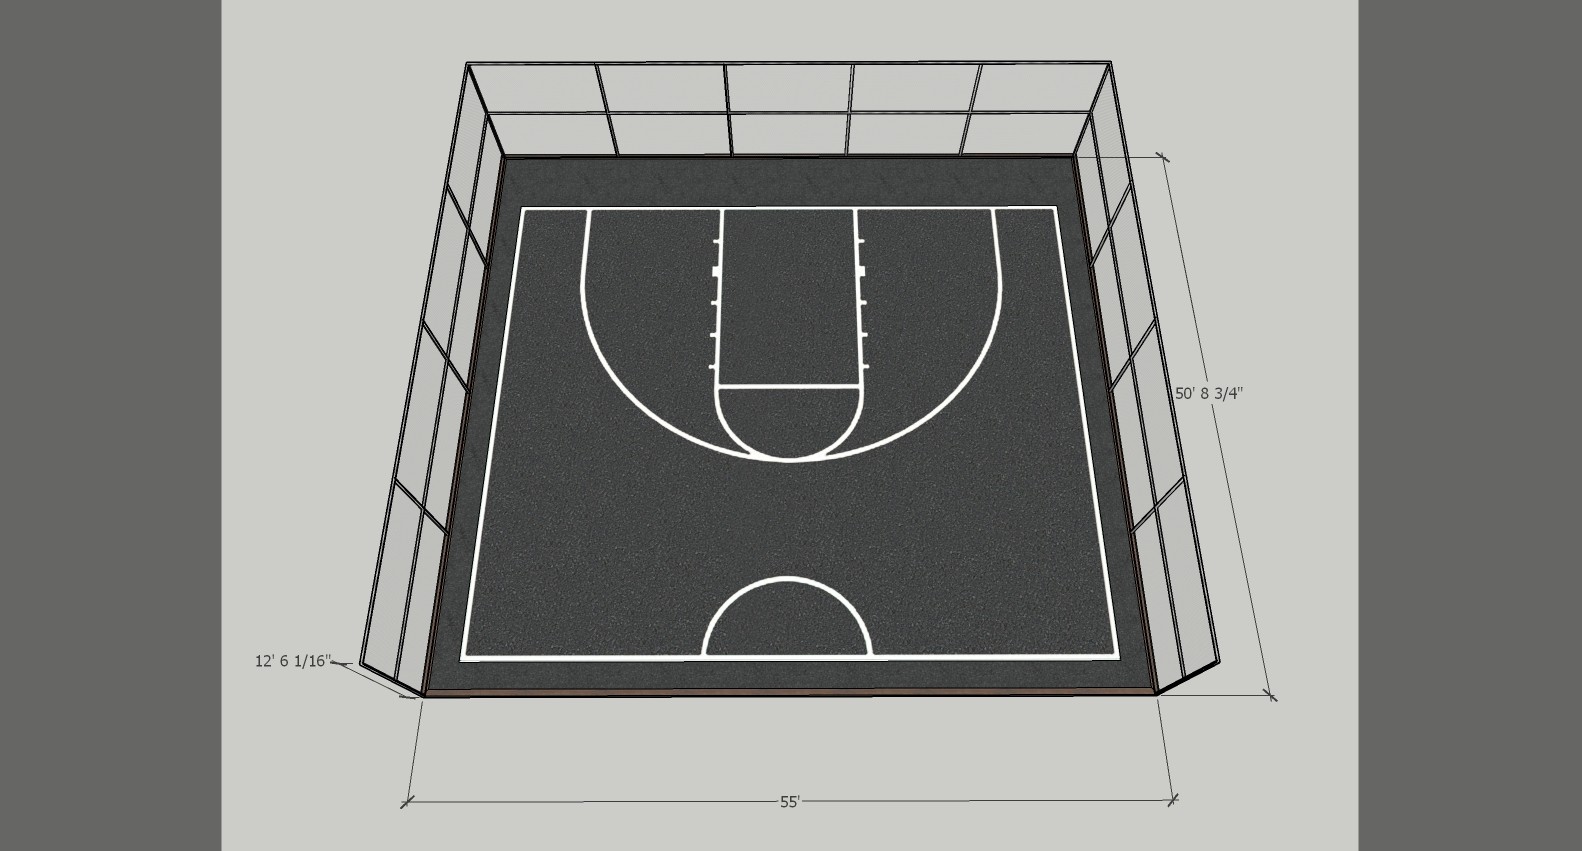 3d-models-download-basketball-court-personal-mockup